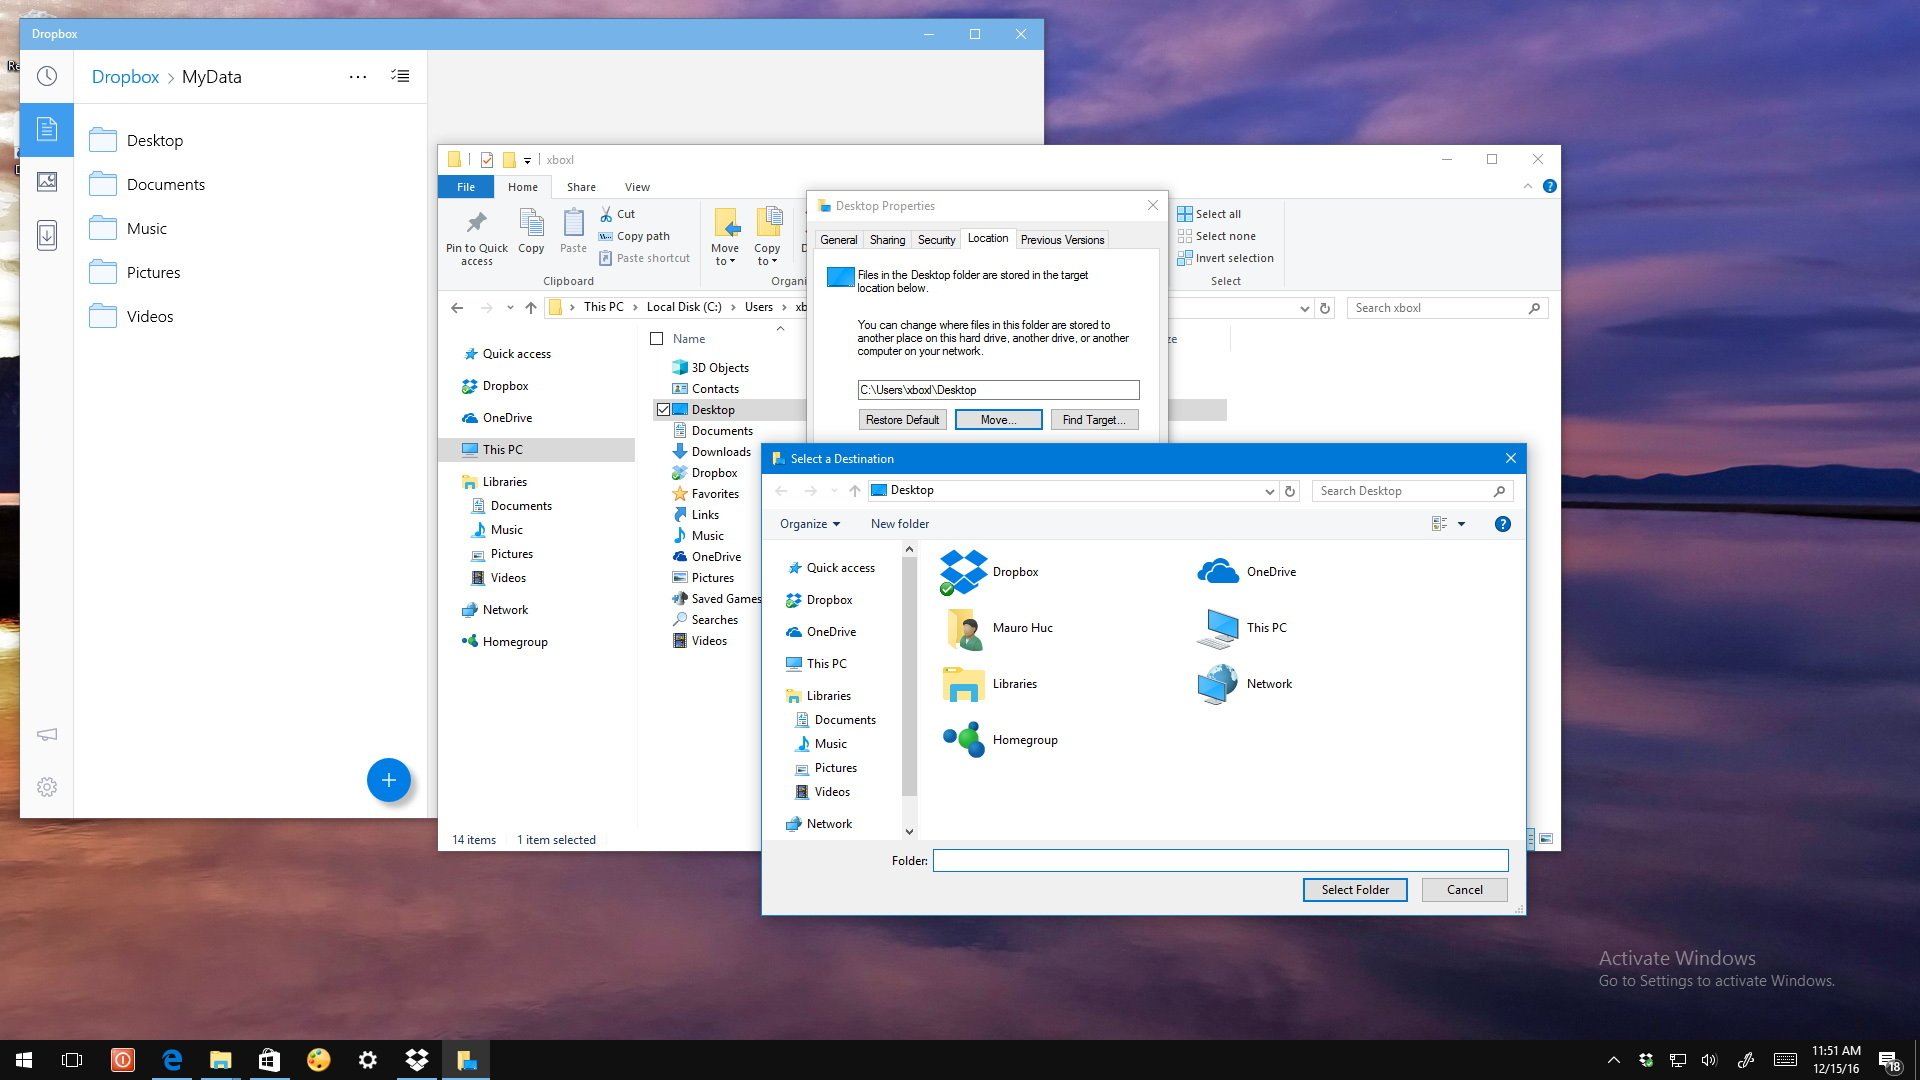 drobpox-windows-10-default-folders-sync.jpg